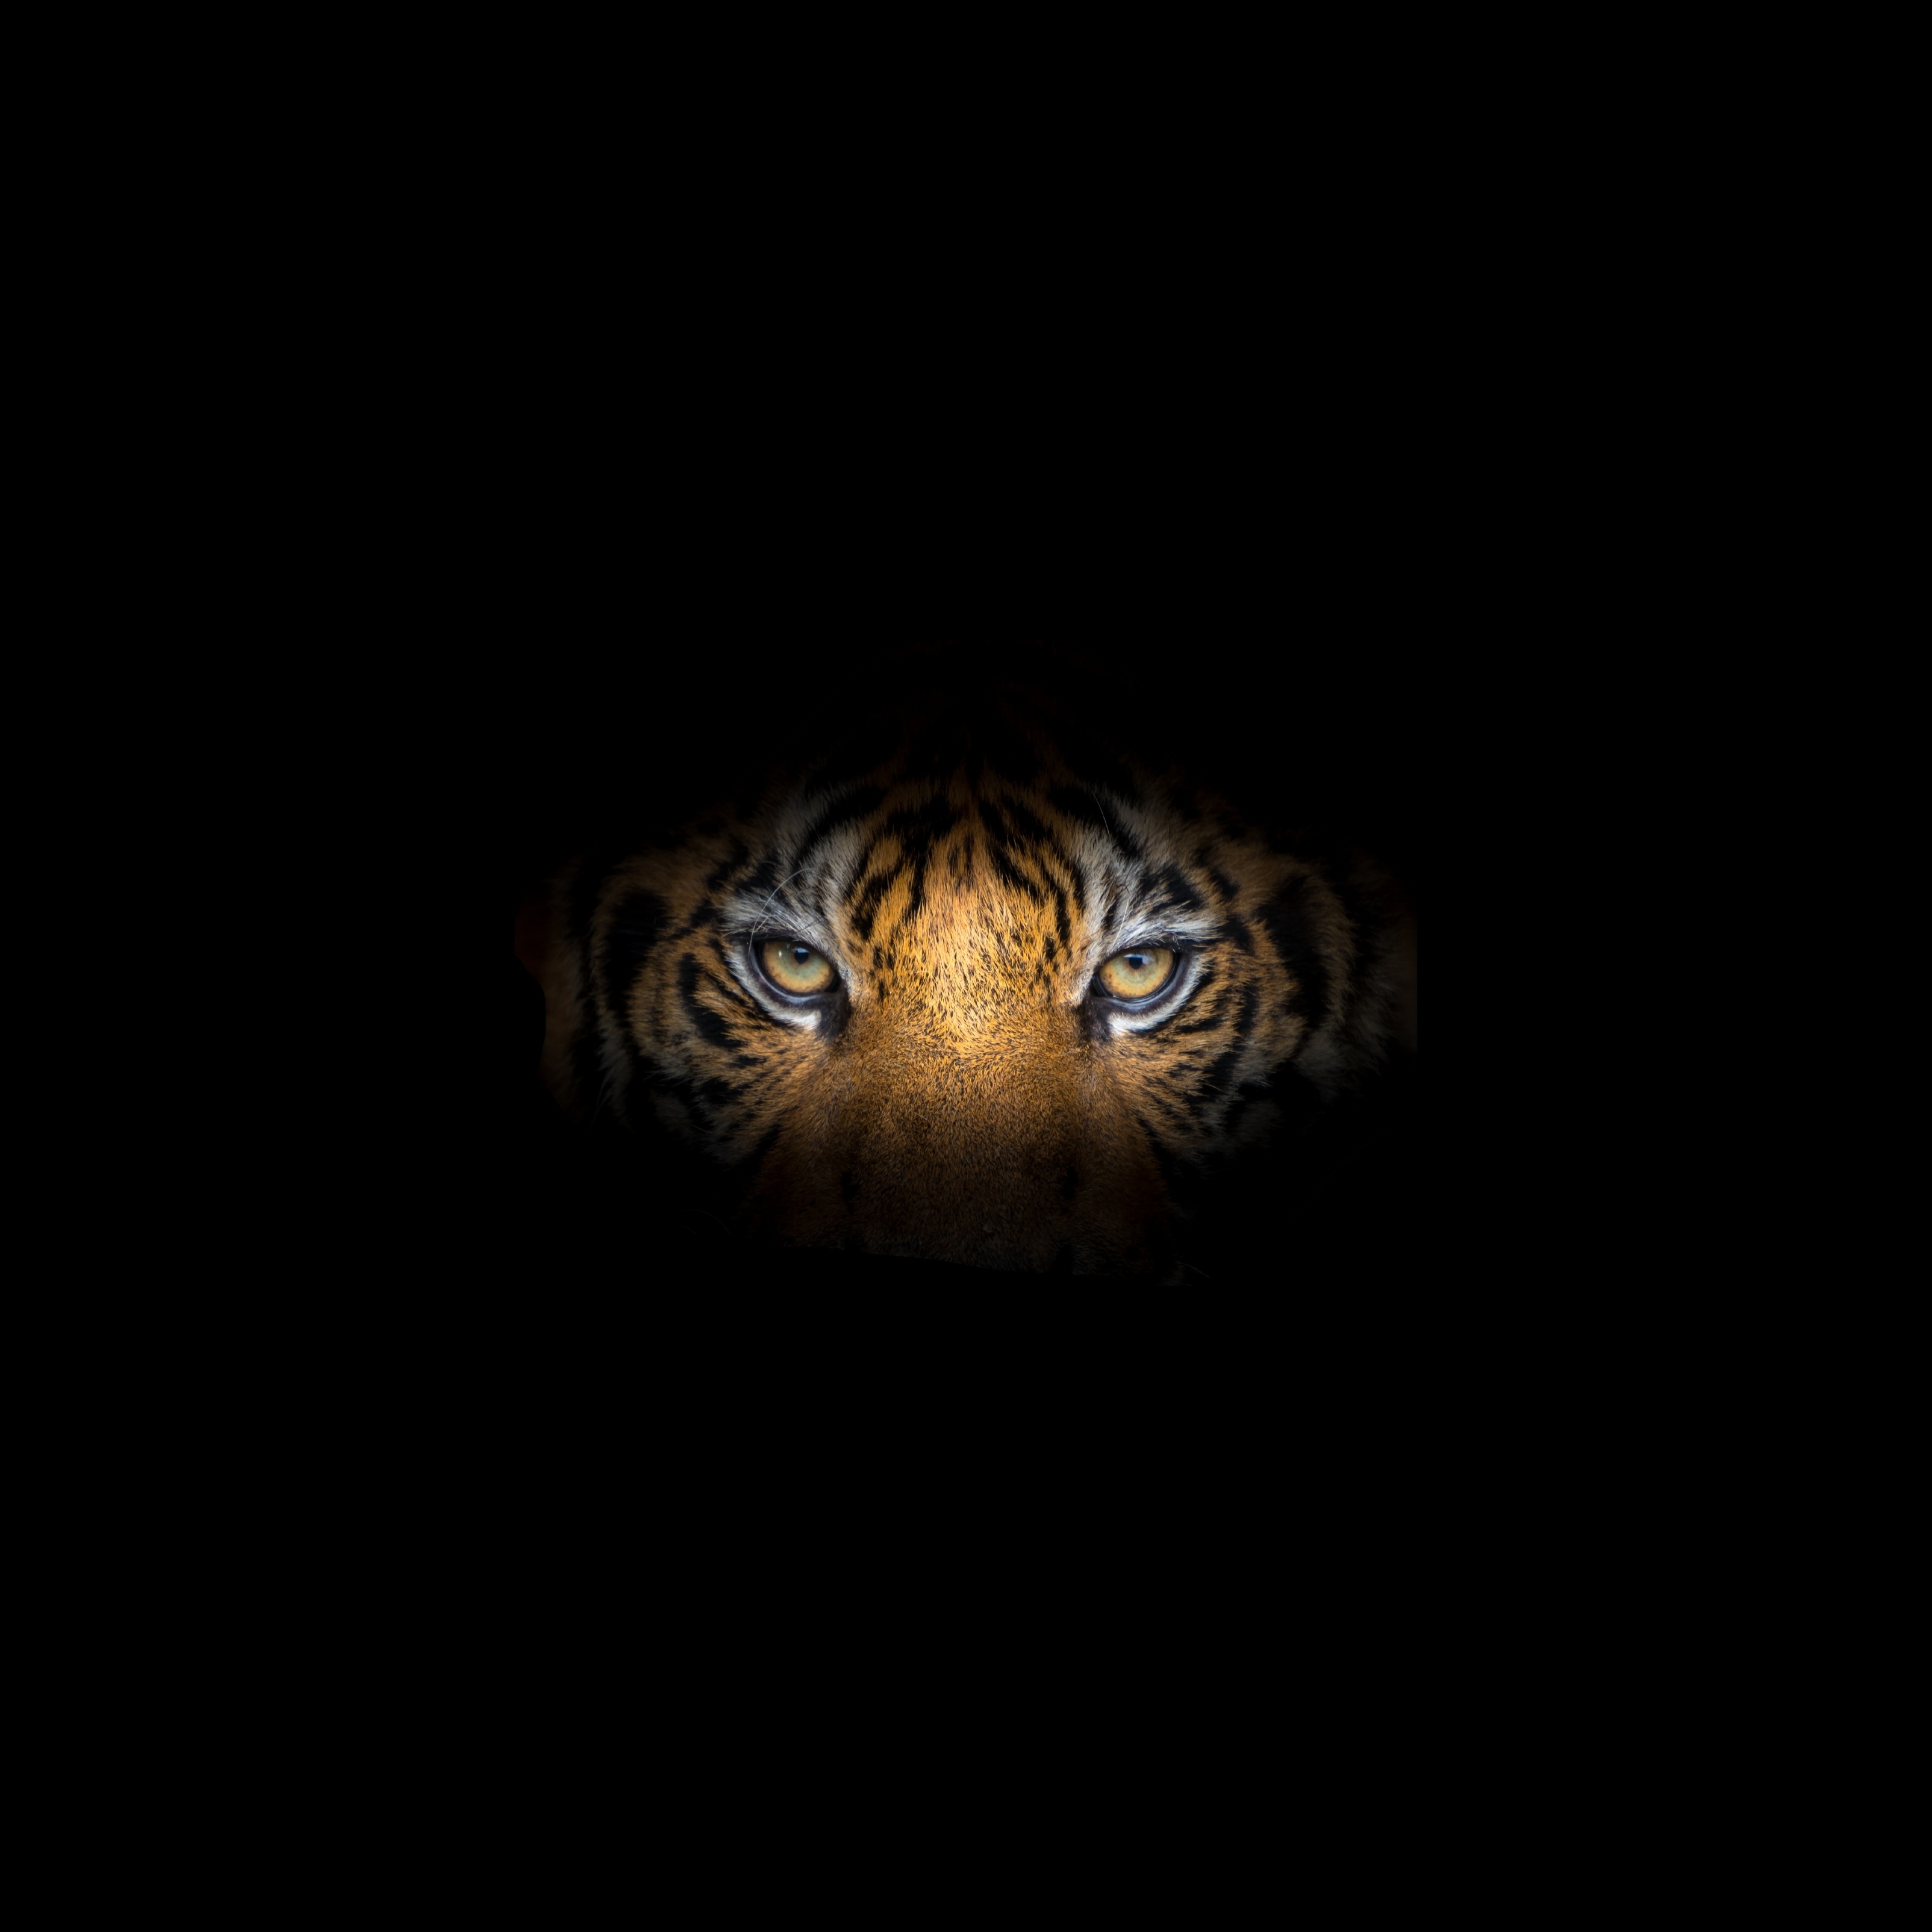 Tiger Face Black Background iPad Wallpaper